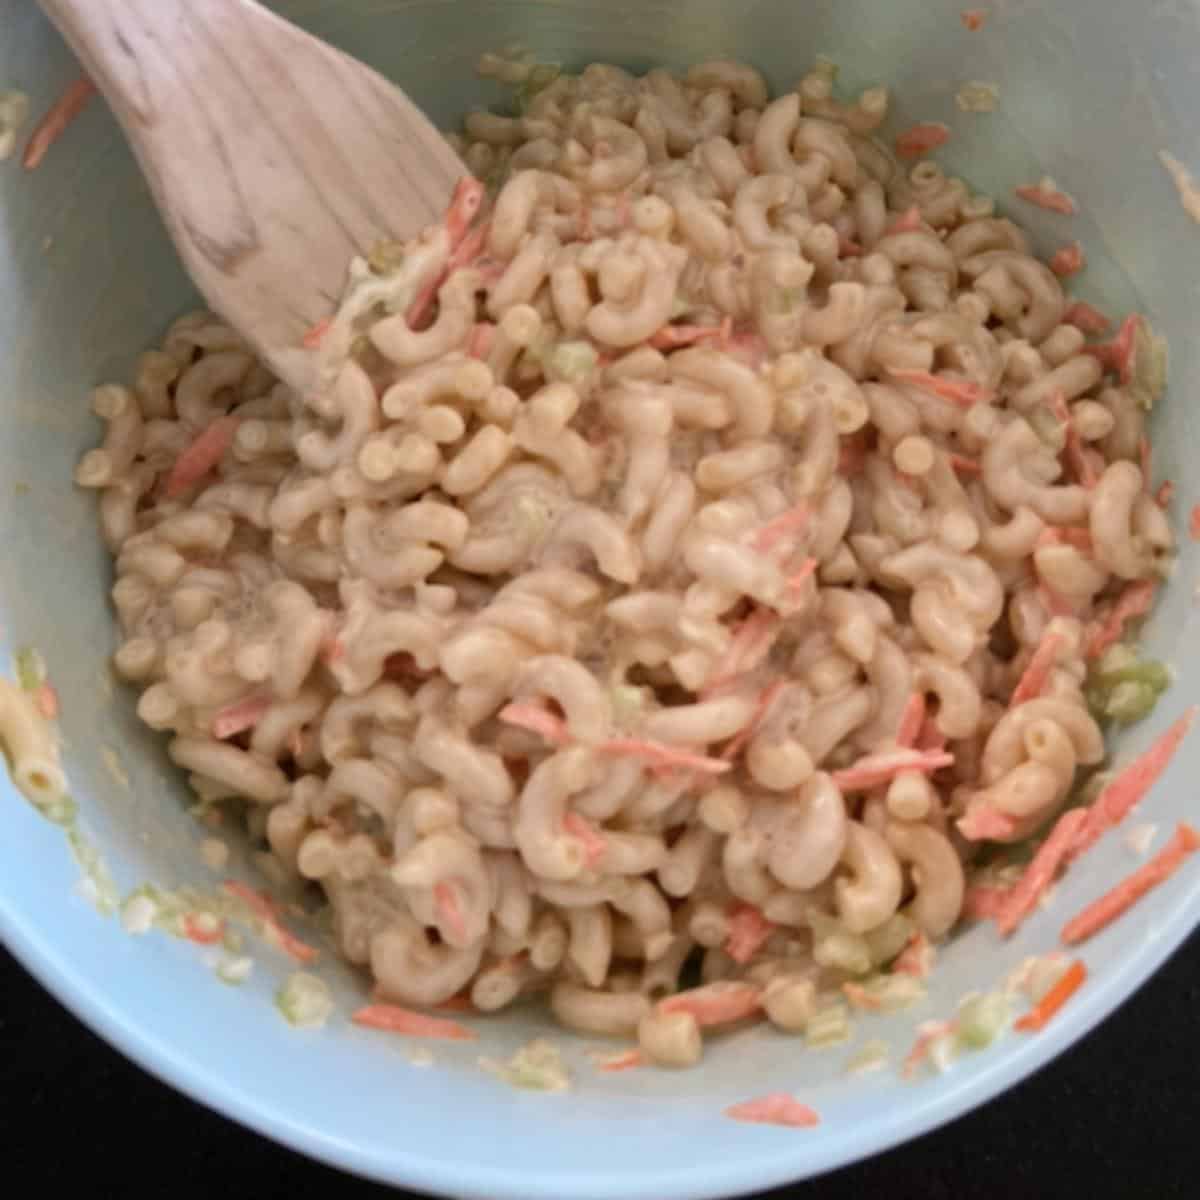 mixing sauce into macaroni salad